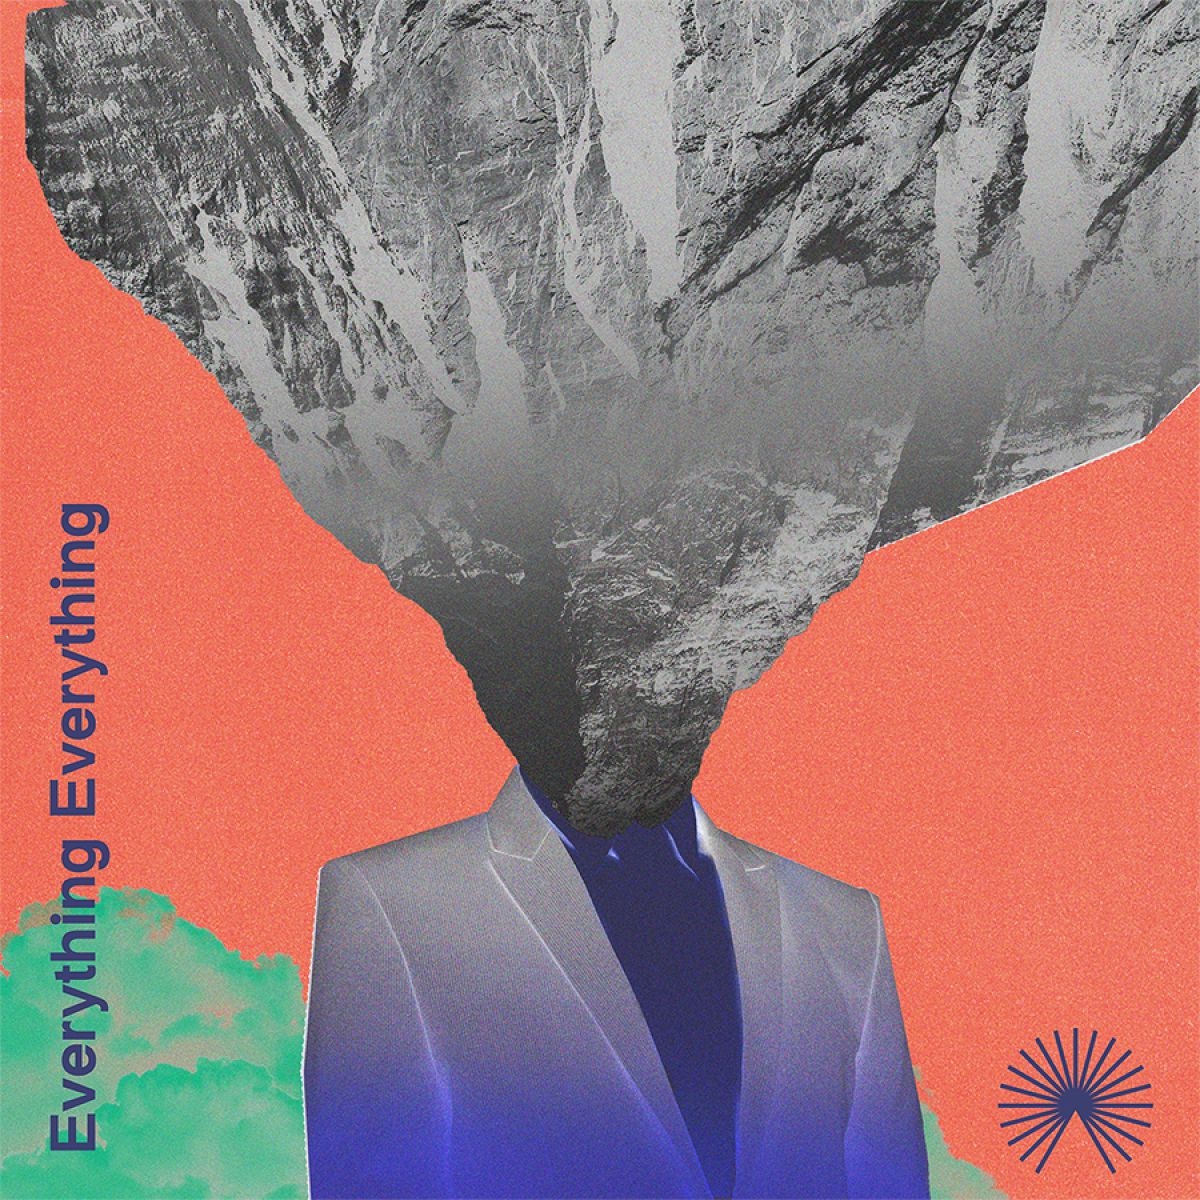 Everything Everything – Mountainhead: An alt-pop pinnacle